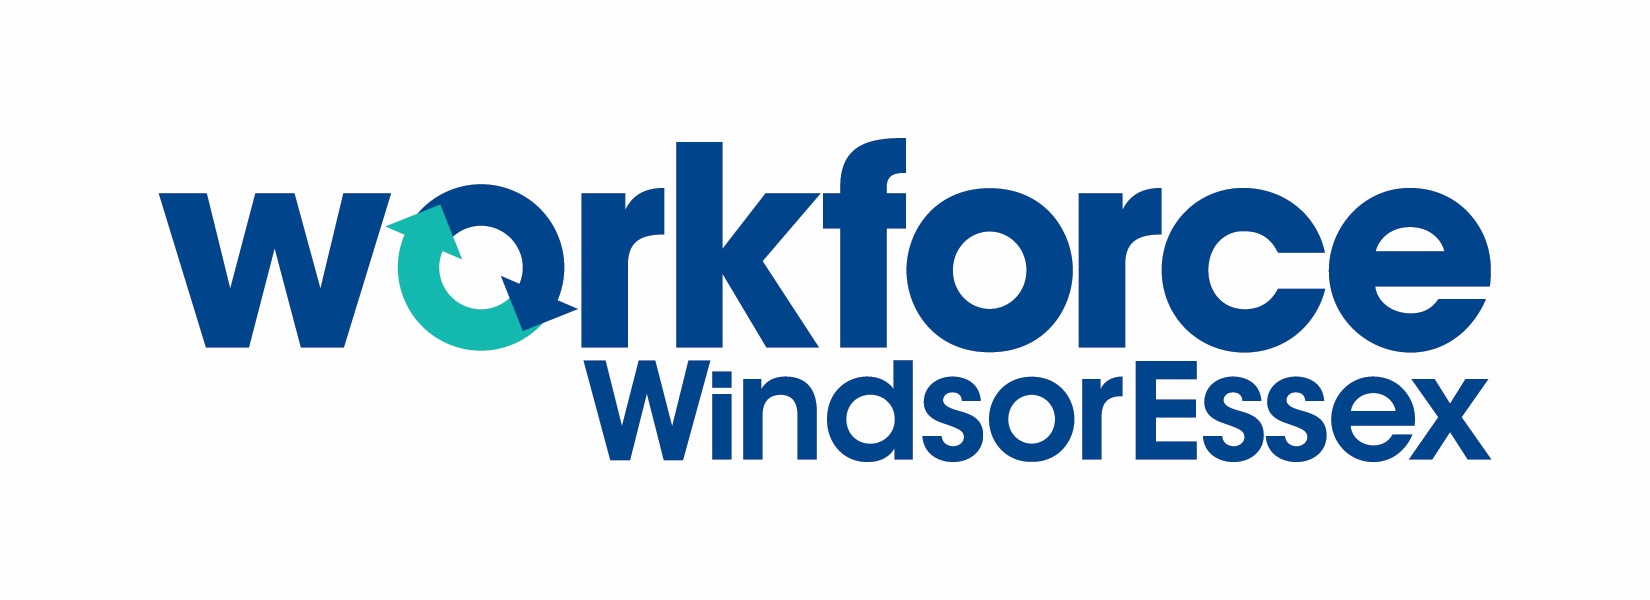 Workforce WindsorEssex Logo - Web Format